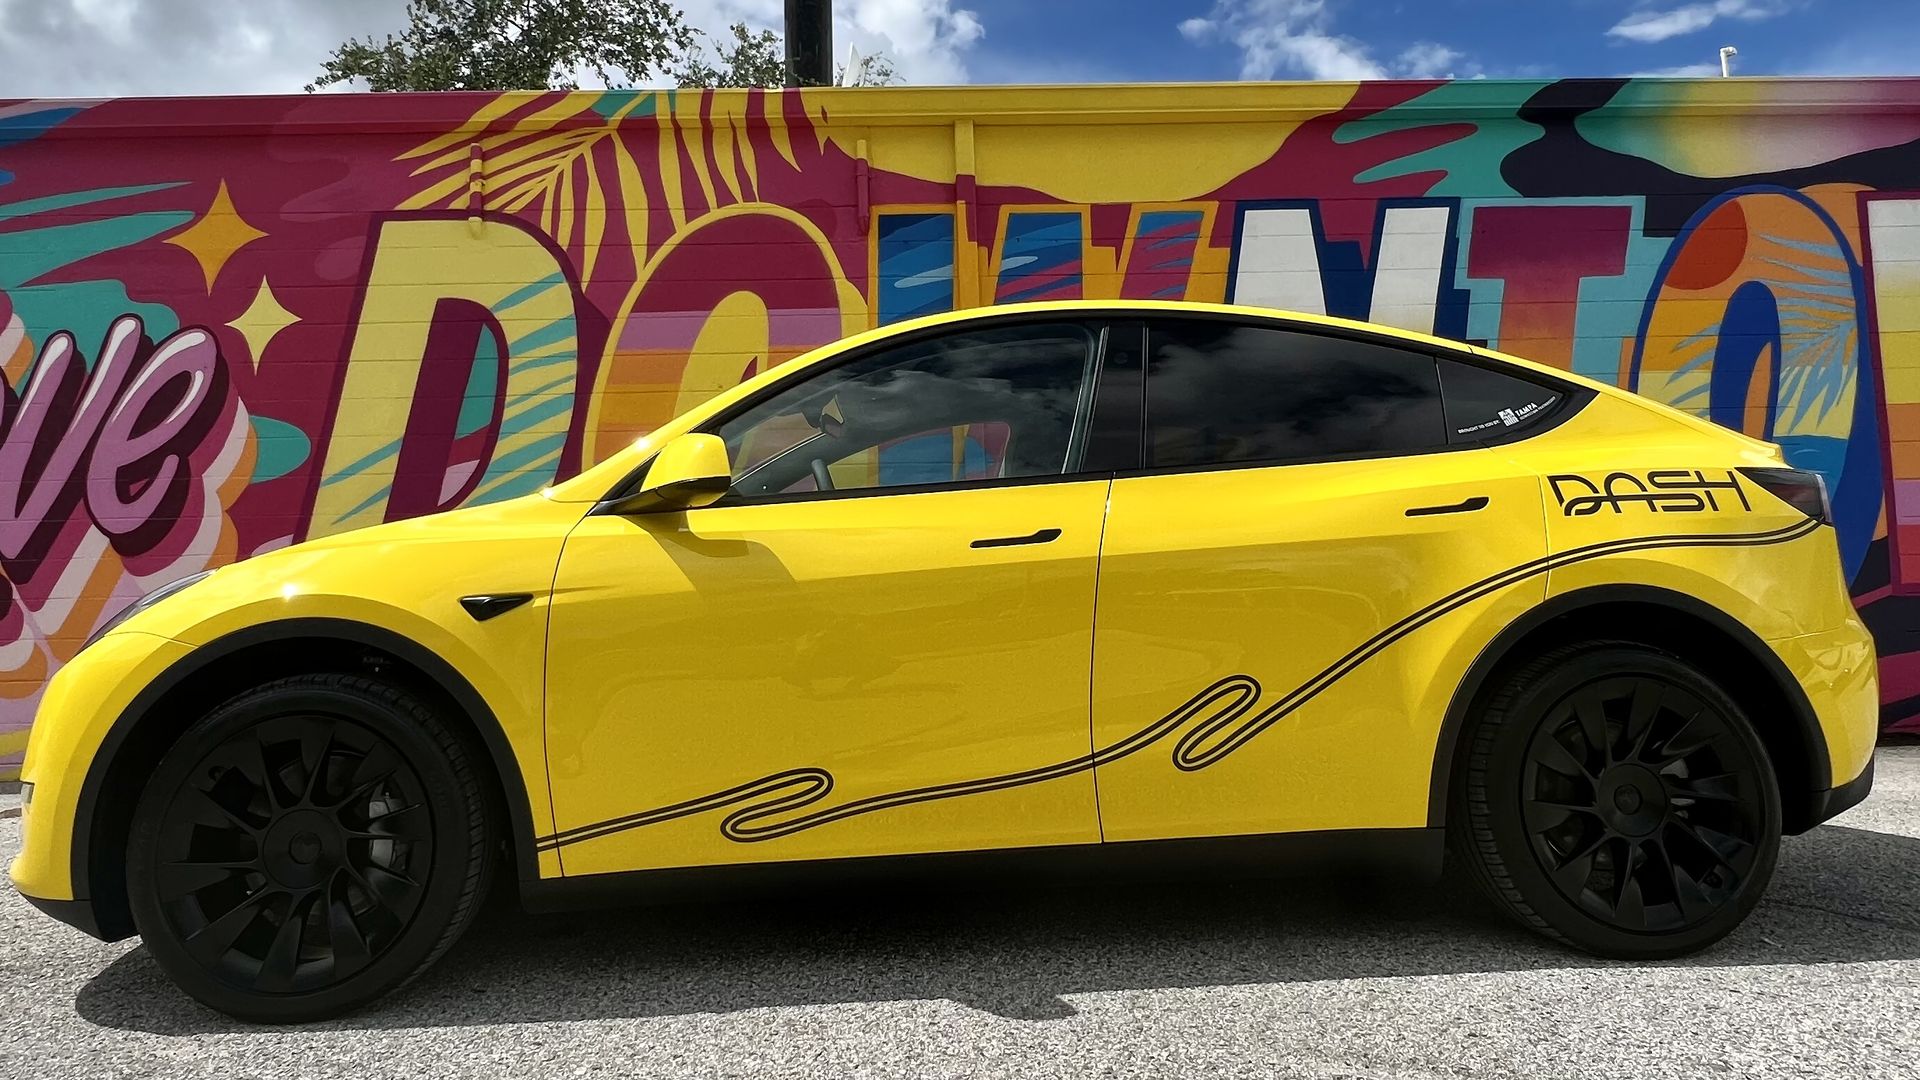 Tampa's DASH rideshare app offers $2 Tesla rides - Axios Tampa Bay